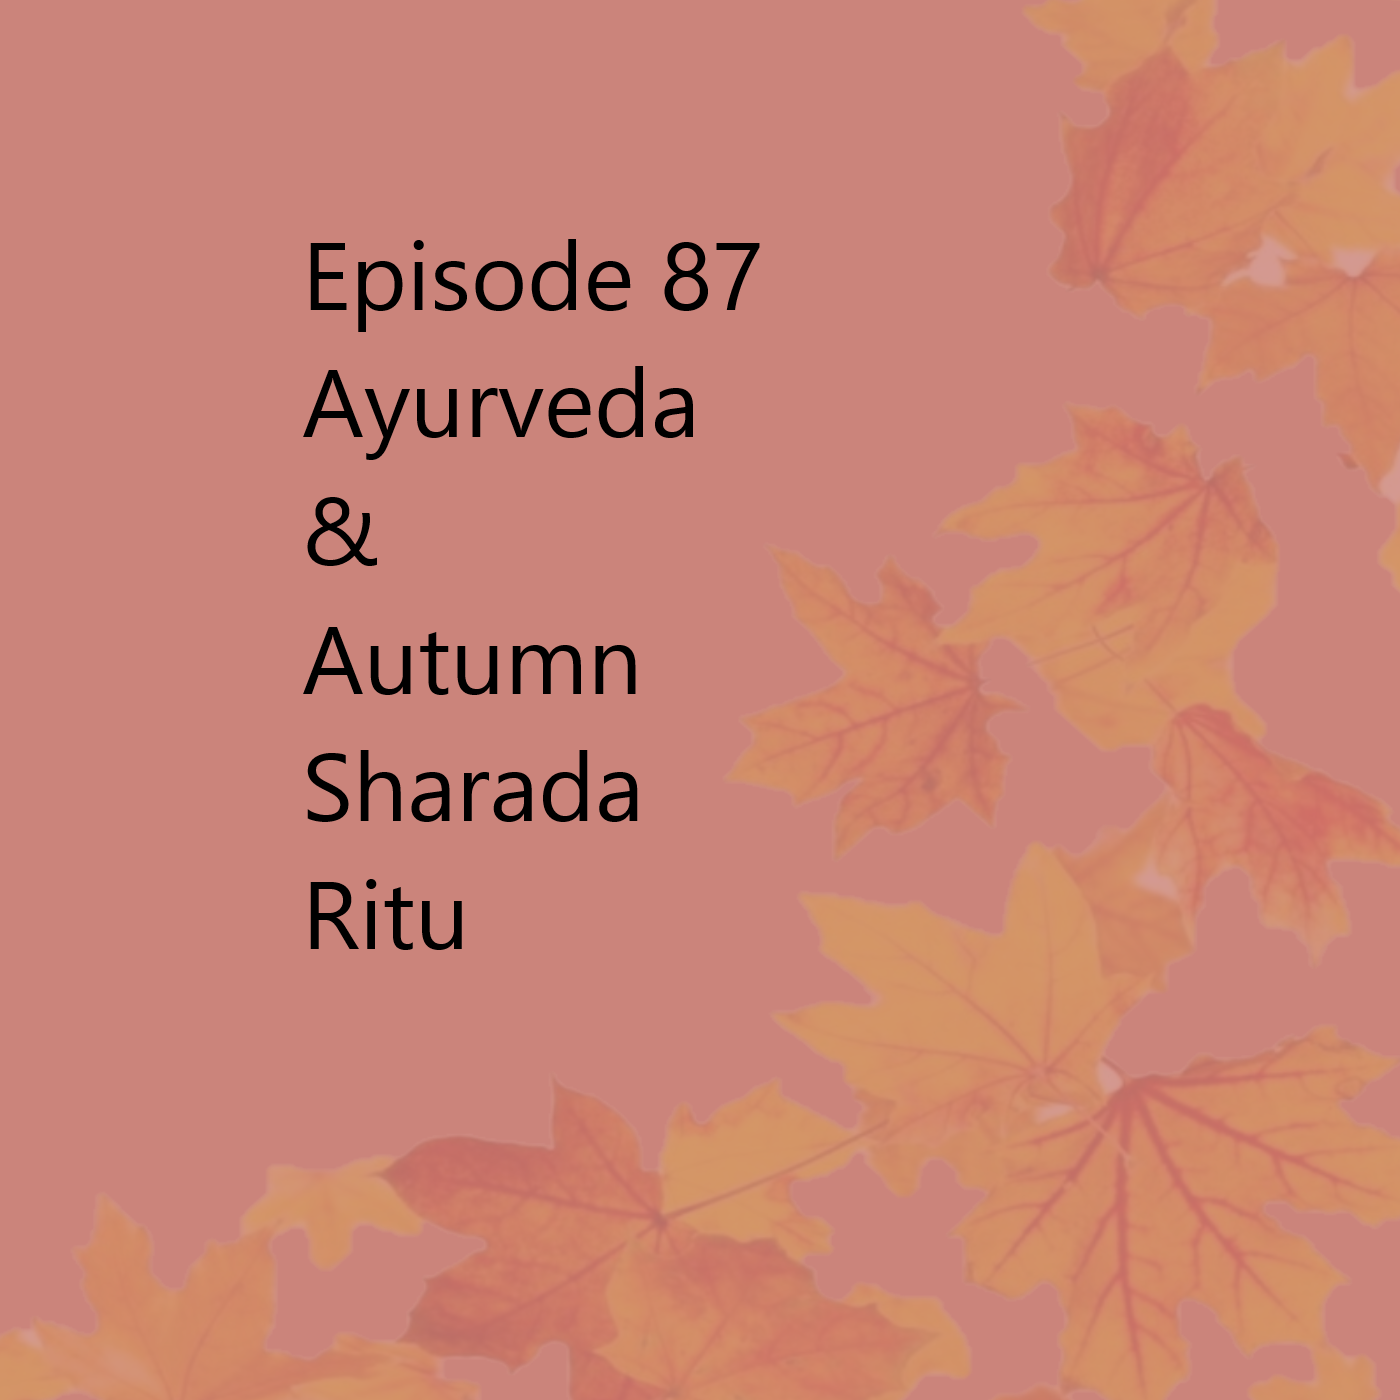 Episode 87 Sharada